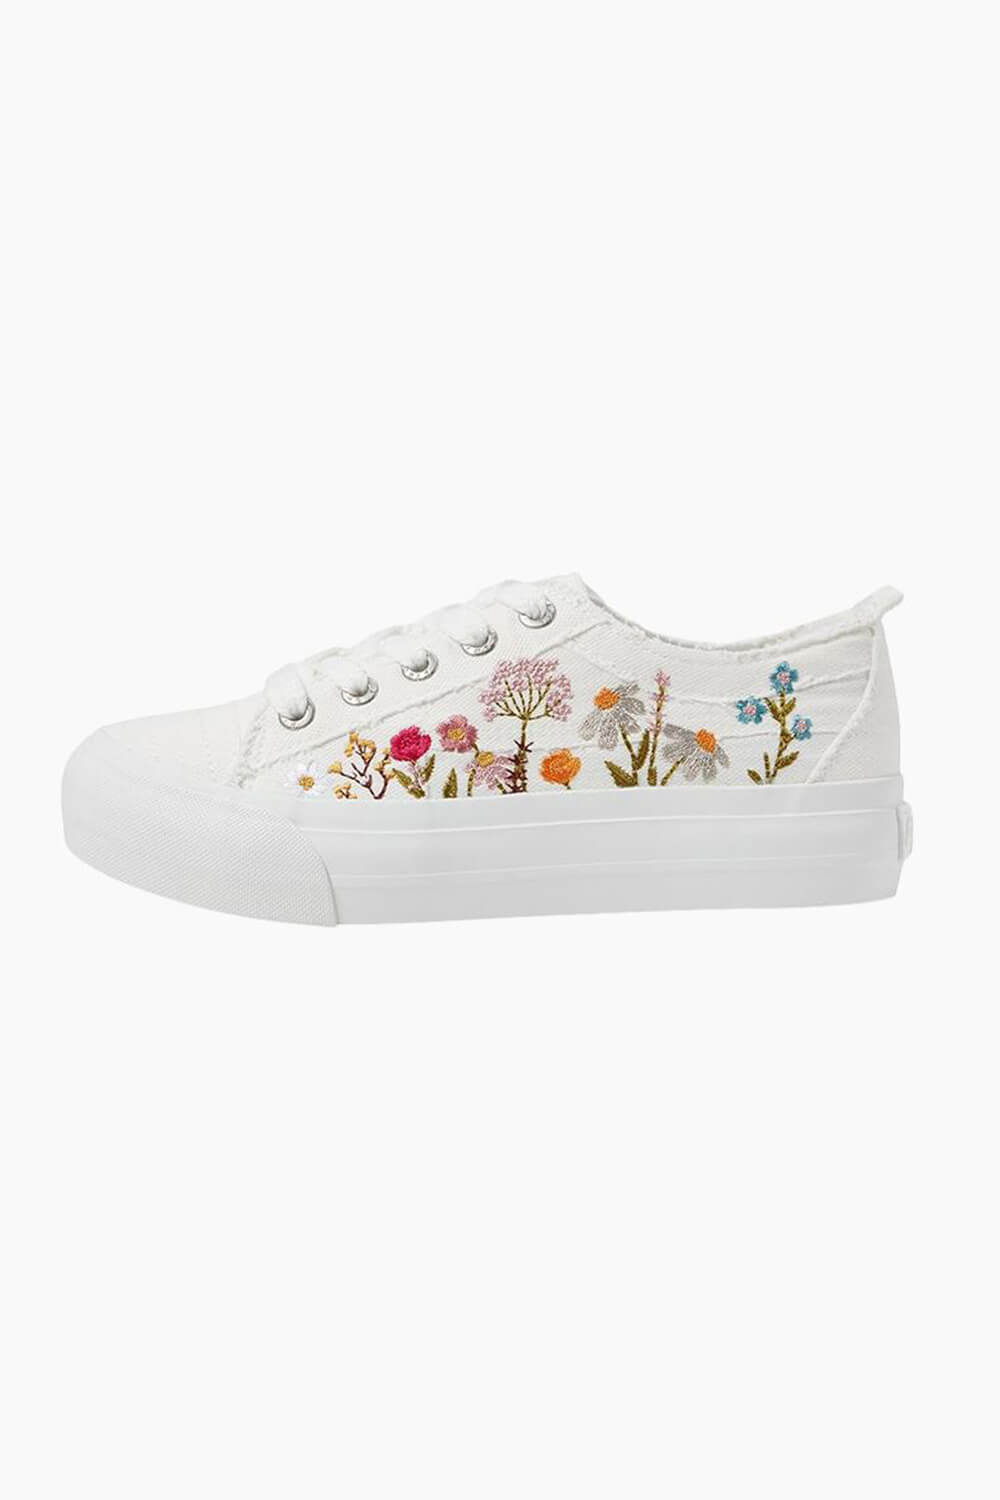 Blowfish Malibu Sadie-Sun Floral Sneakers for Women in White | ZS 